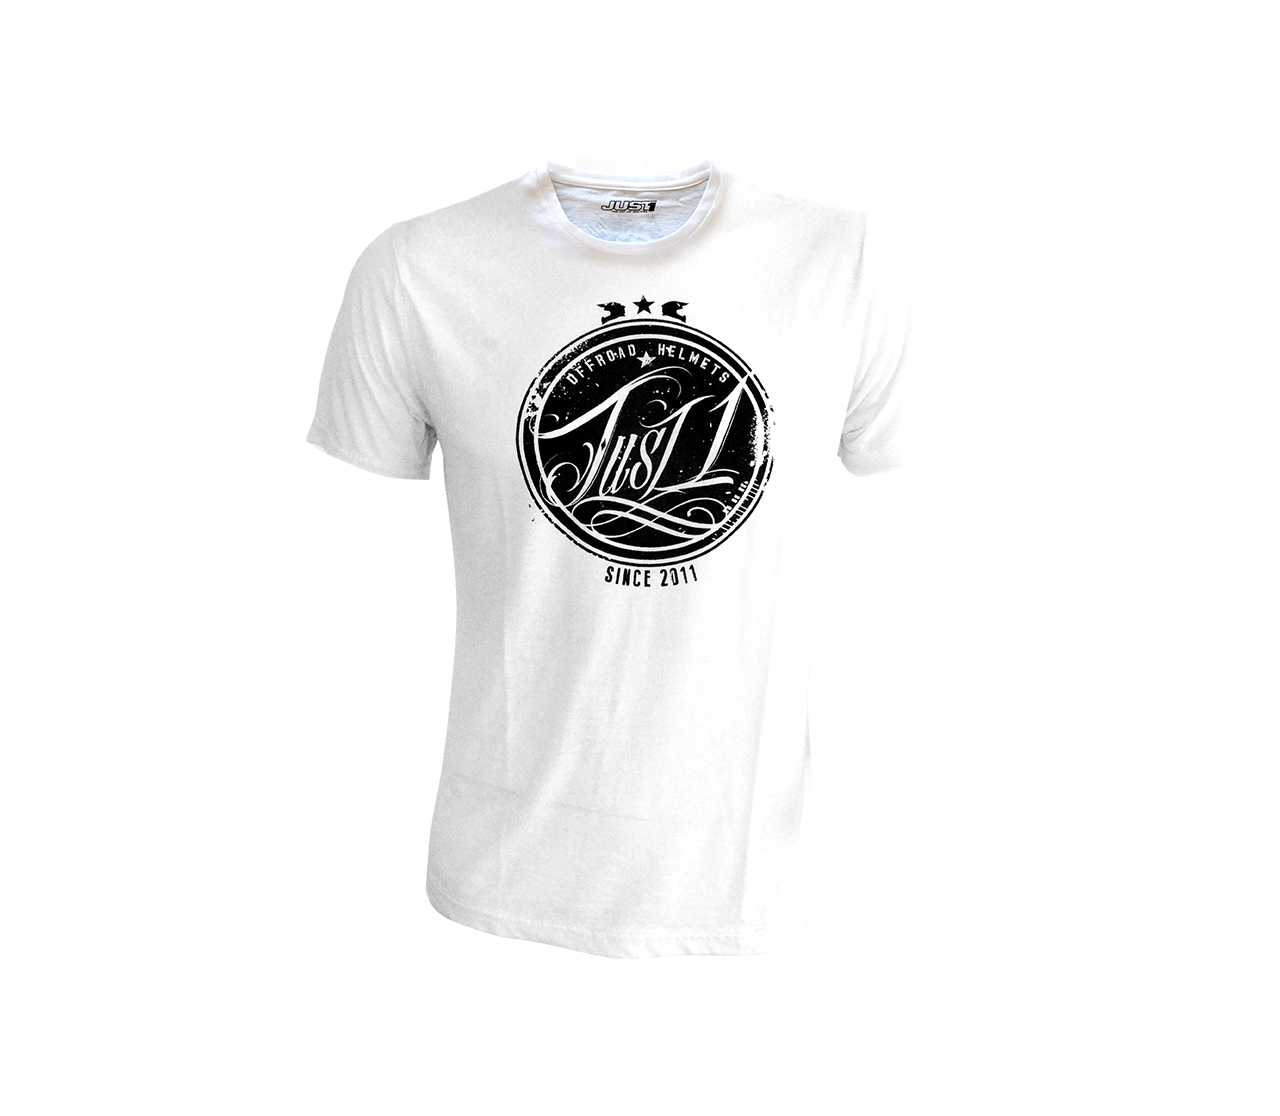 JUST1 T-shirt Foxhill White